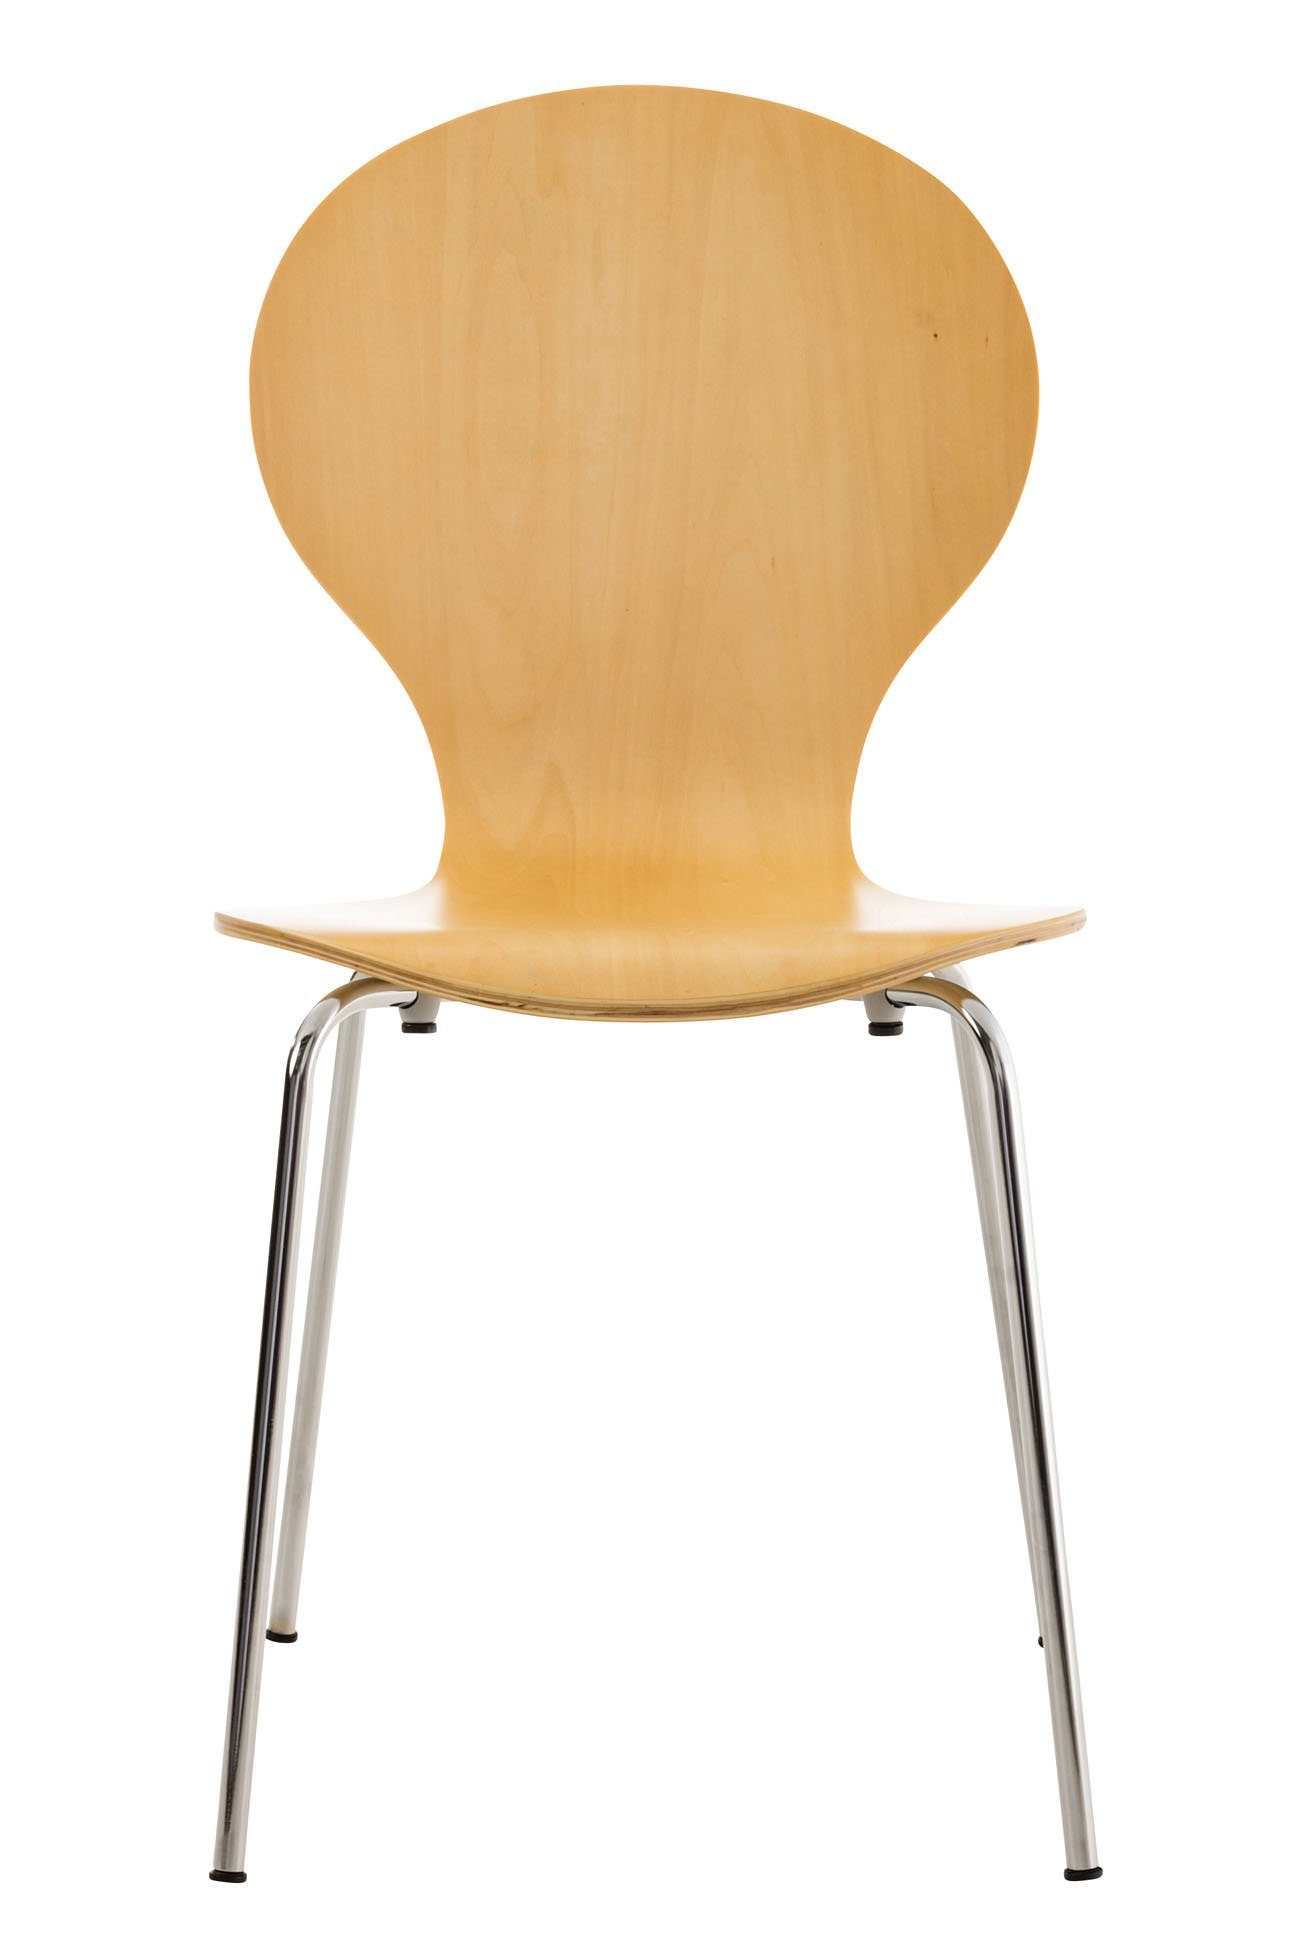 TPFLiving Besucherstuhl Daggy mit ergonomisch - Warteraumstuhl Holz Sitzfläche: (Besprechungsstuhl Sitzfläche Natura - chrom Gestell: - Messestuhl), Konferenzstuhl geformter - Metall